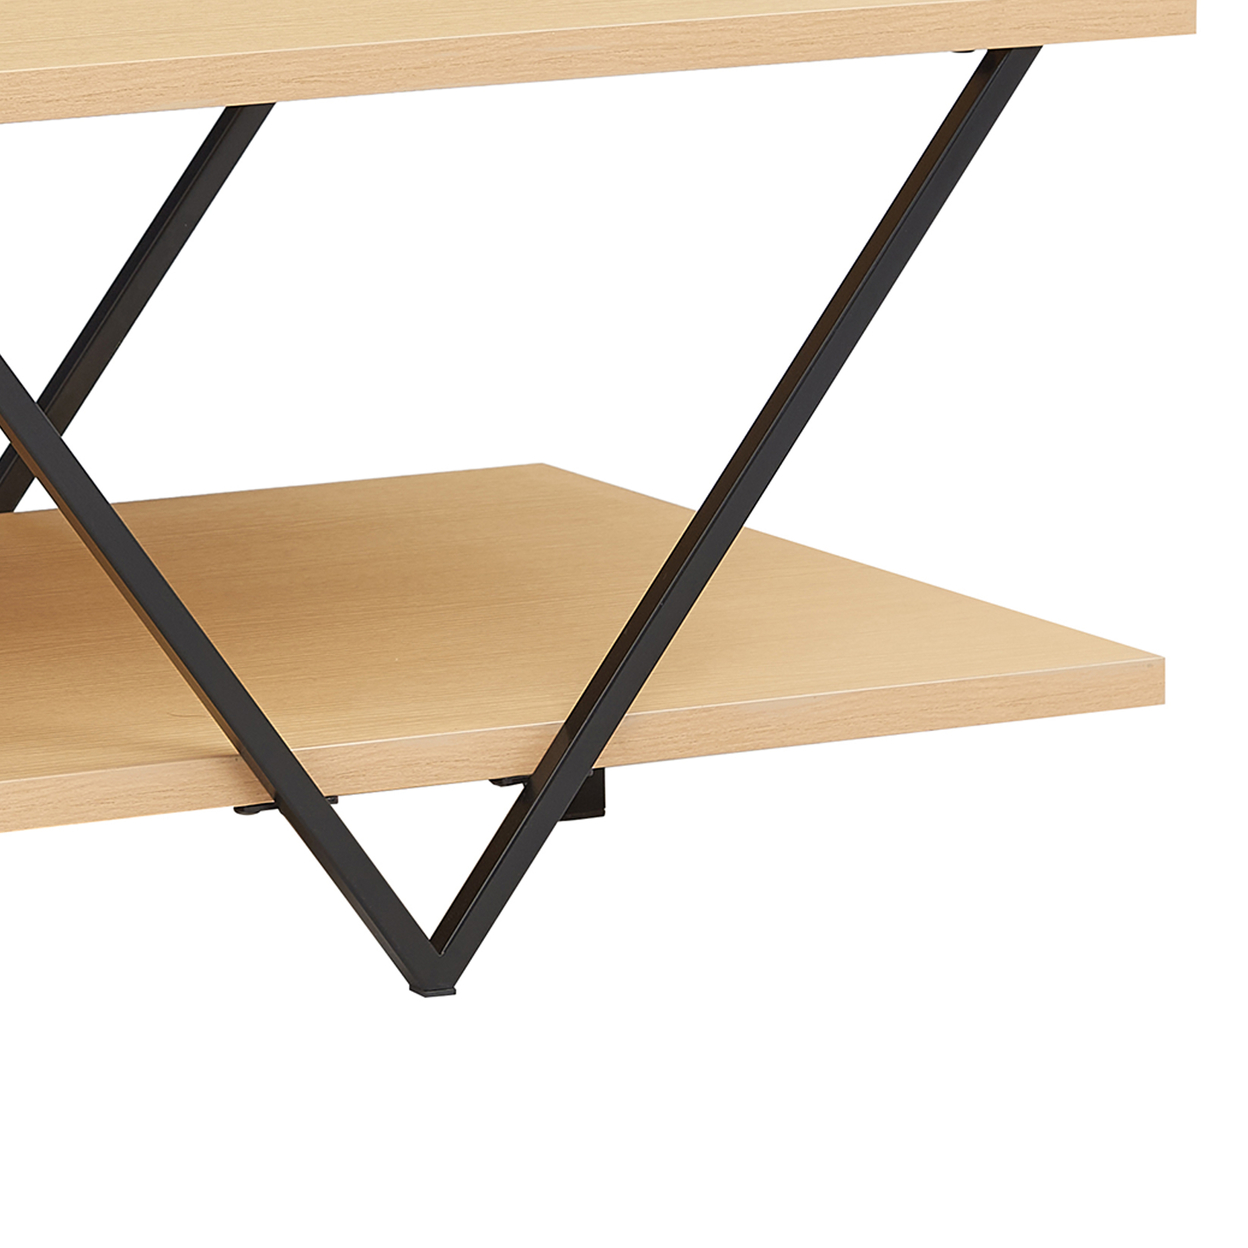 48 Inch 2 Tier Top Coffee Table With Bottom Shelf, V Shape Black Metal Legs, Light Maple Wood